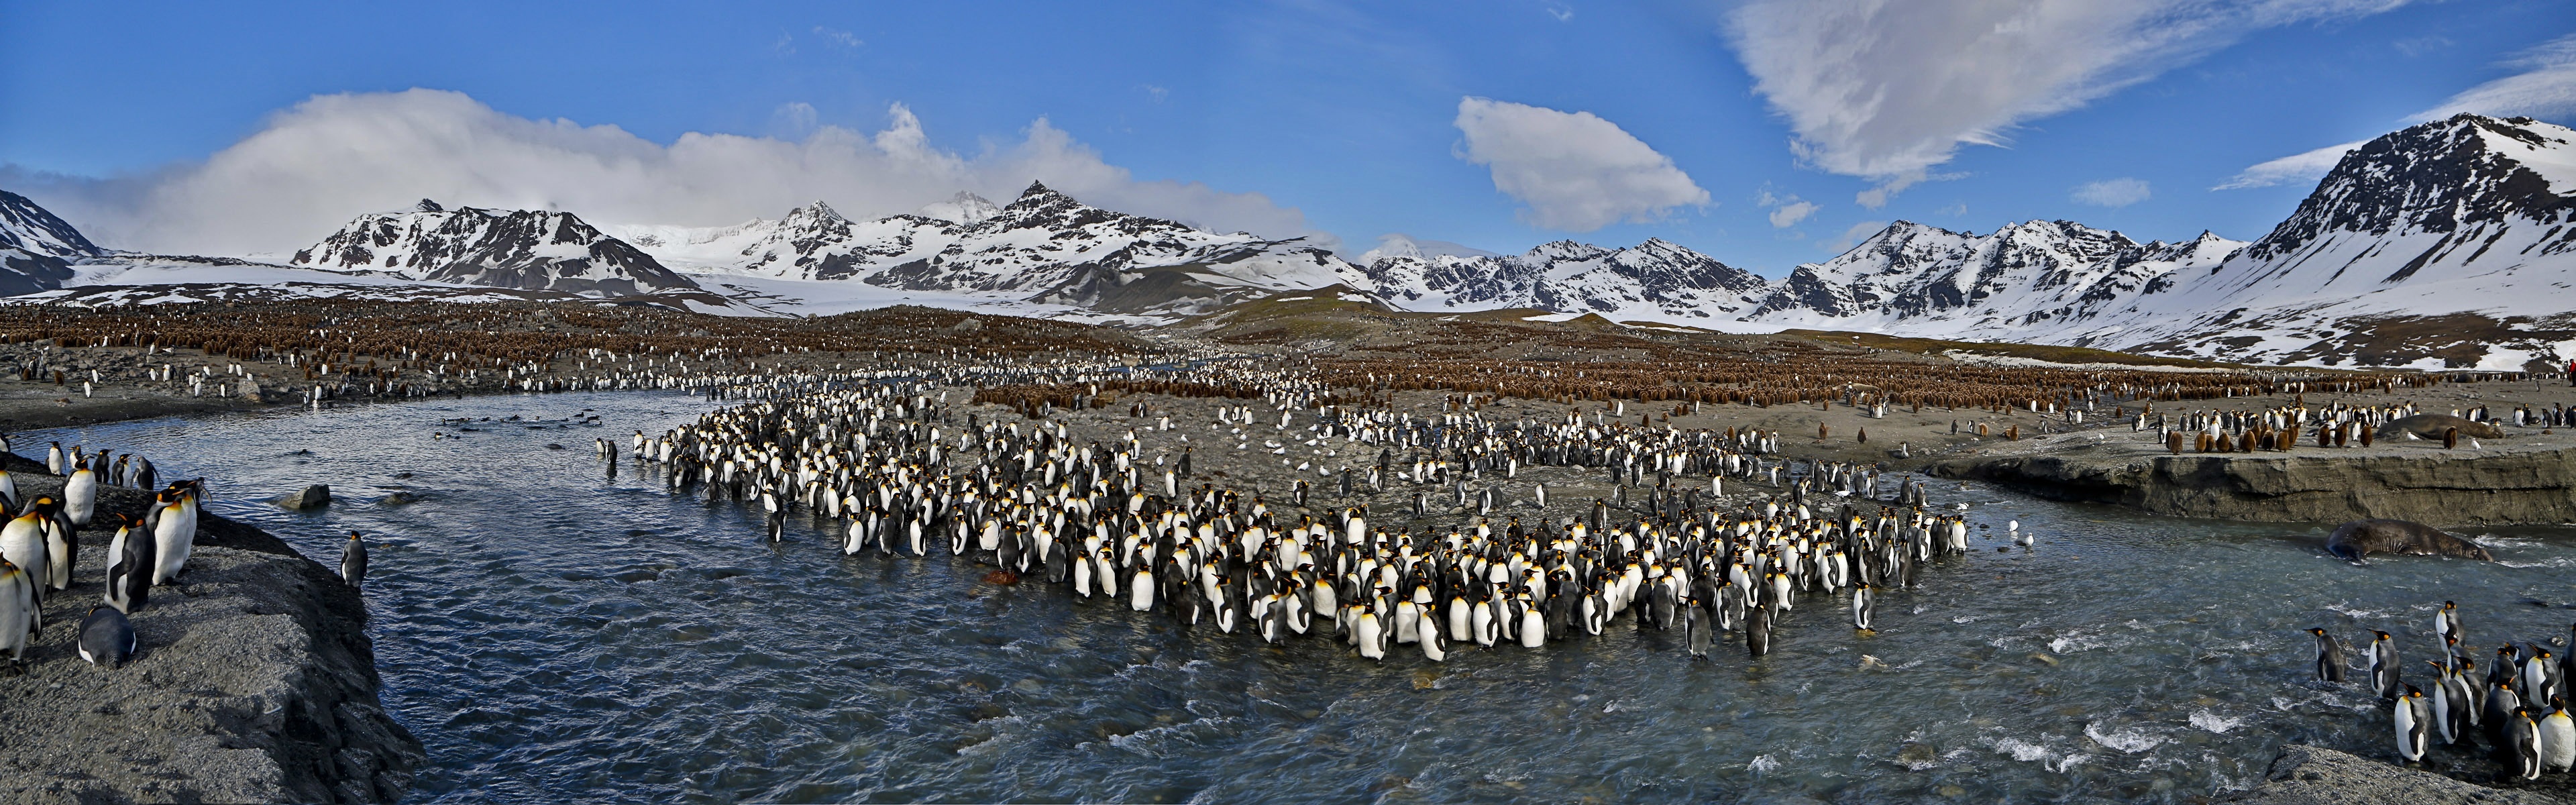 South Sandwich Islands, Pristine wilderness, Penguin colony, Remote beauty, 3840x1200 Dual Screen Desktop